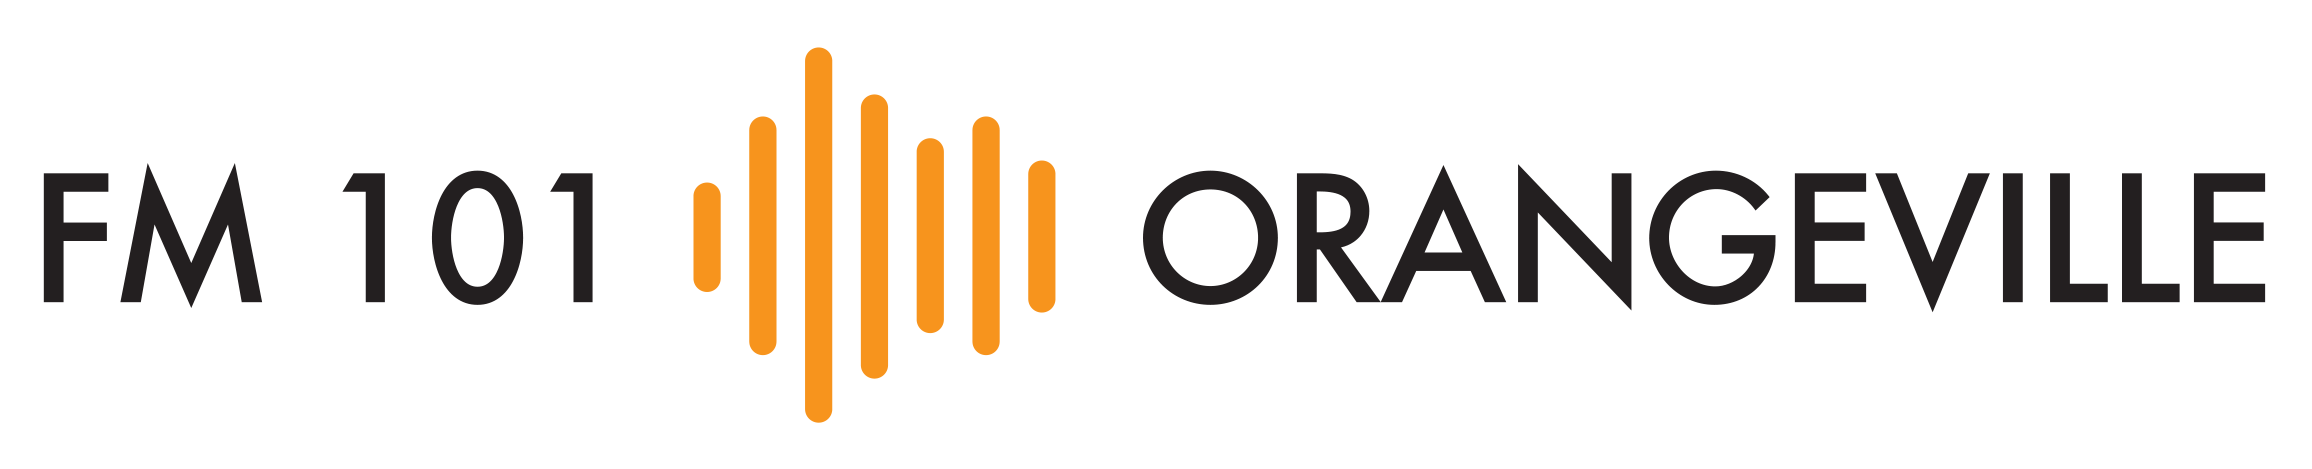 FM 101 Orangeville - Media Sponsor